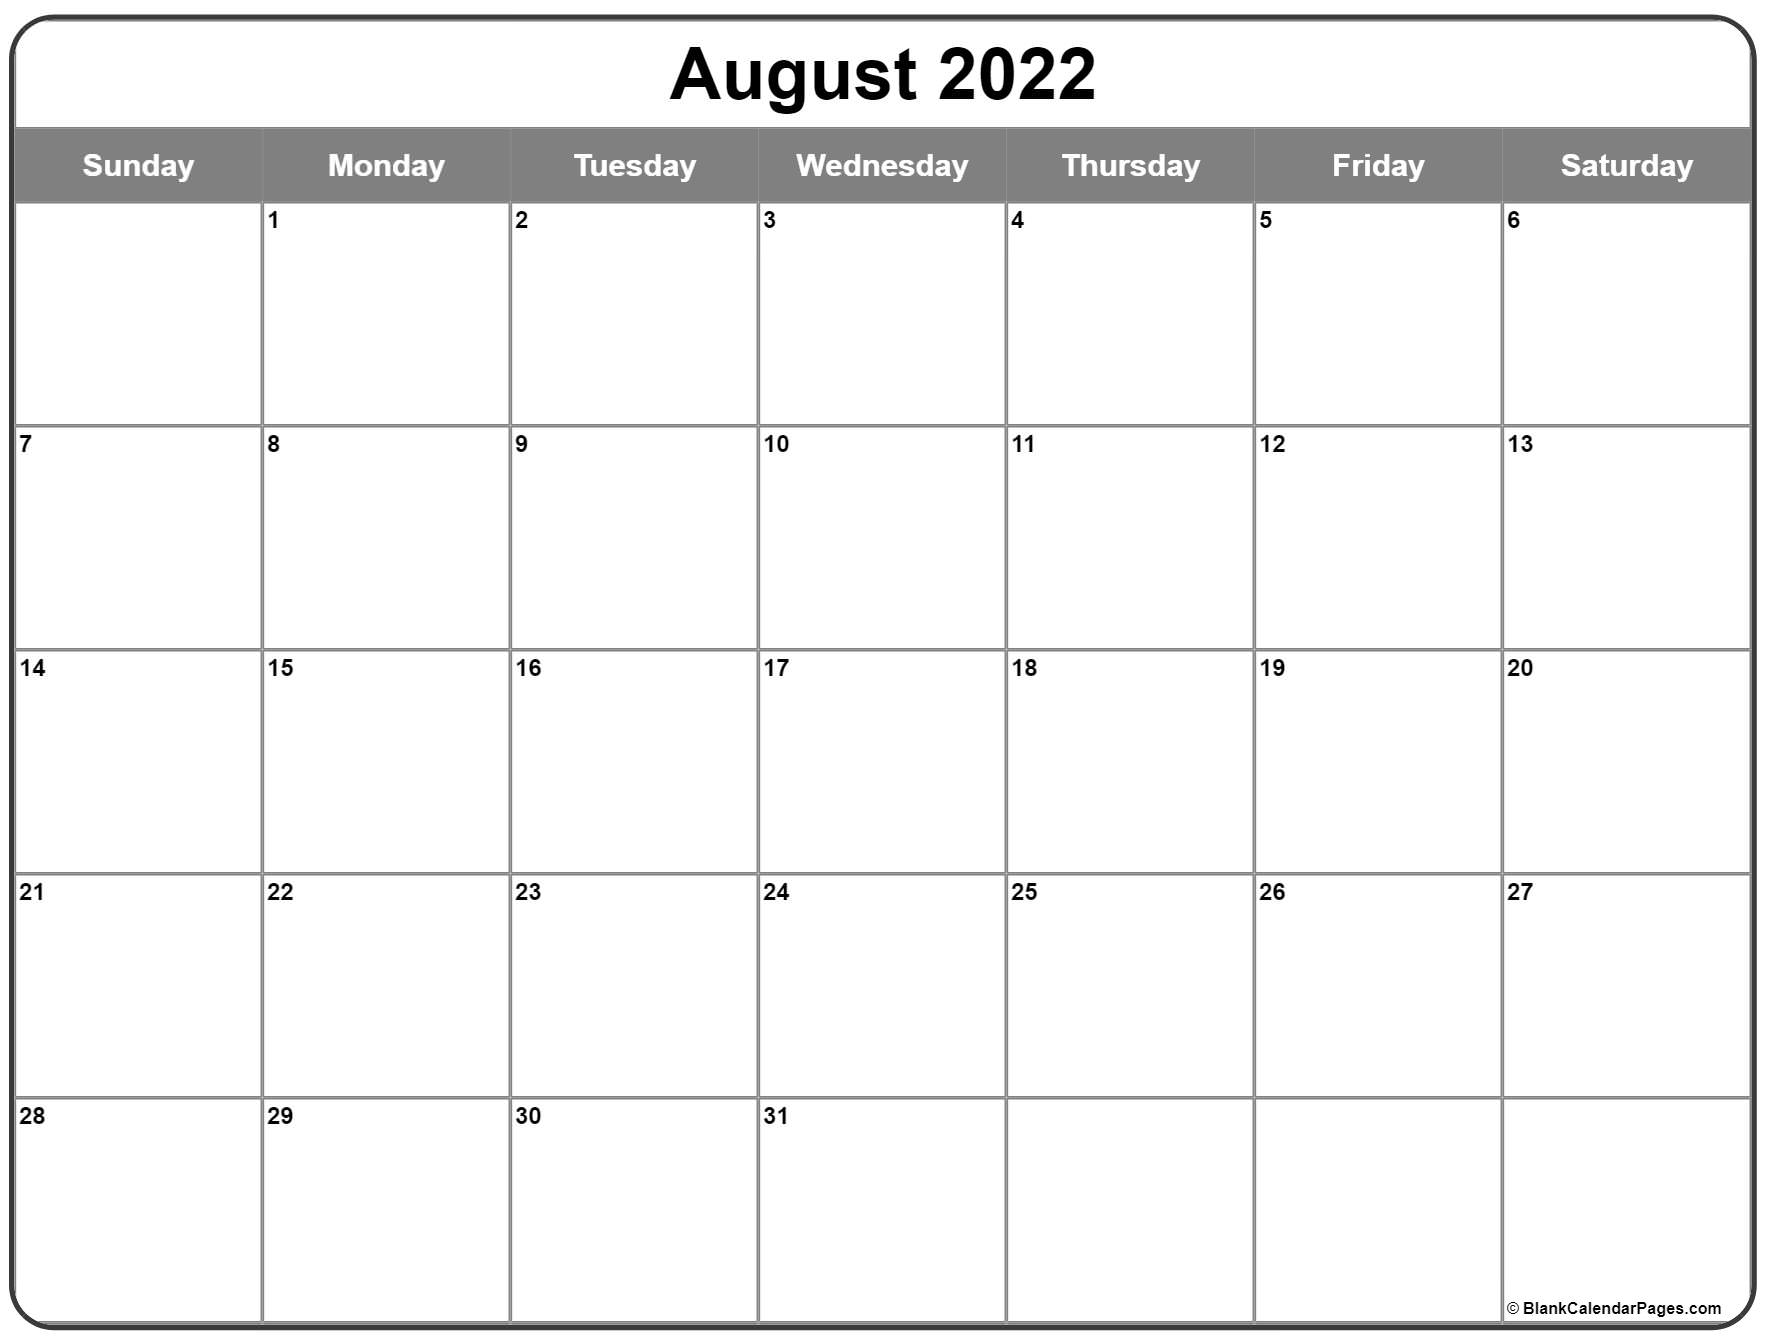 Catch 2022 Calendar For August